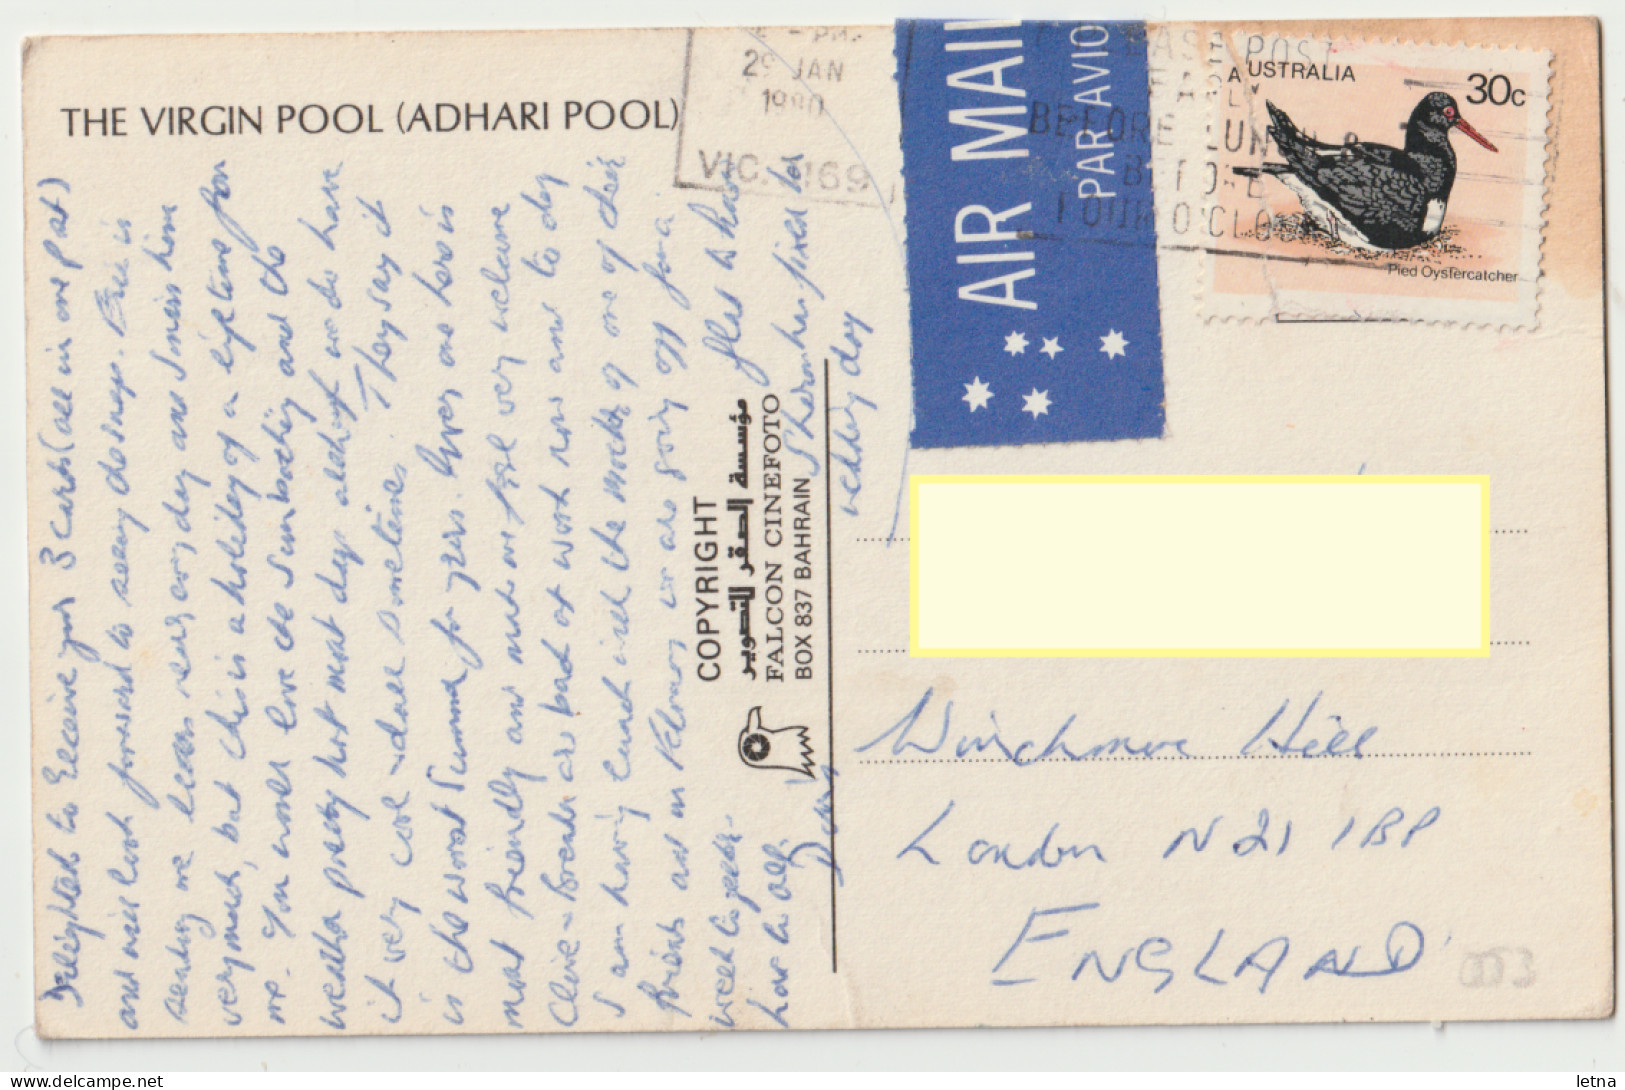 BAHRAIN Adhari Swimming Pool Amusement Park Postcard 1980 VICTORIA AUSTRALIA Pmk & Bird Stamp - Bahrein